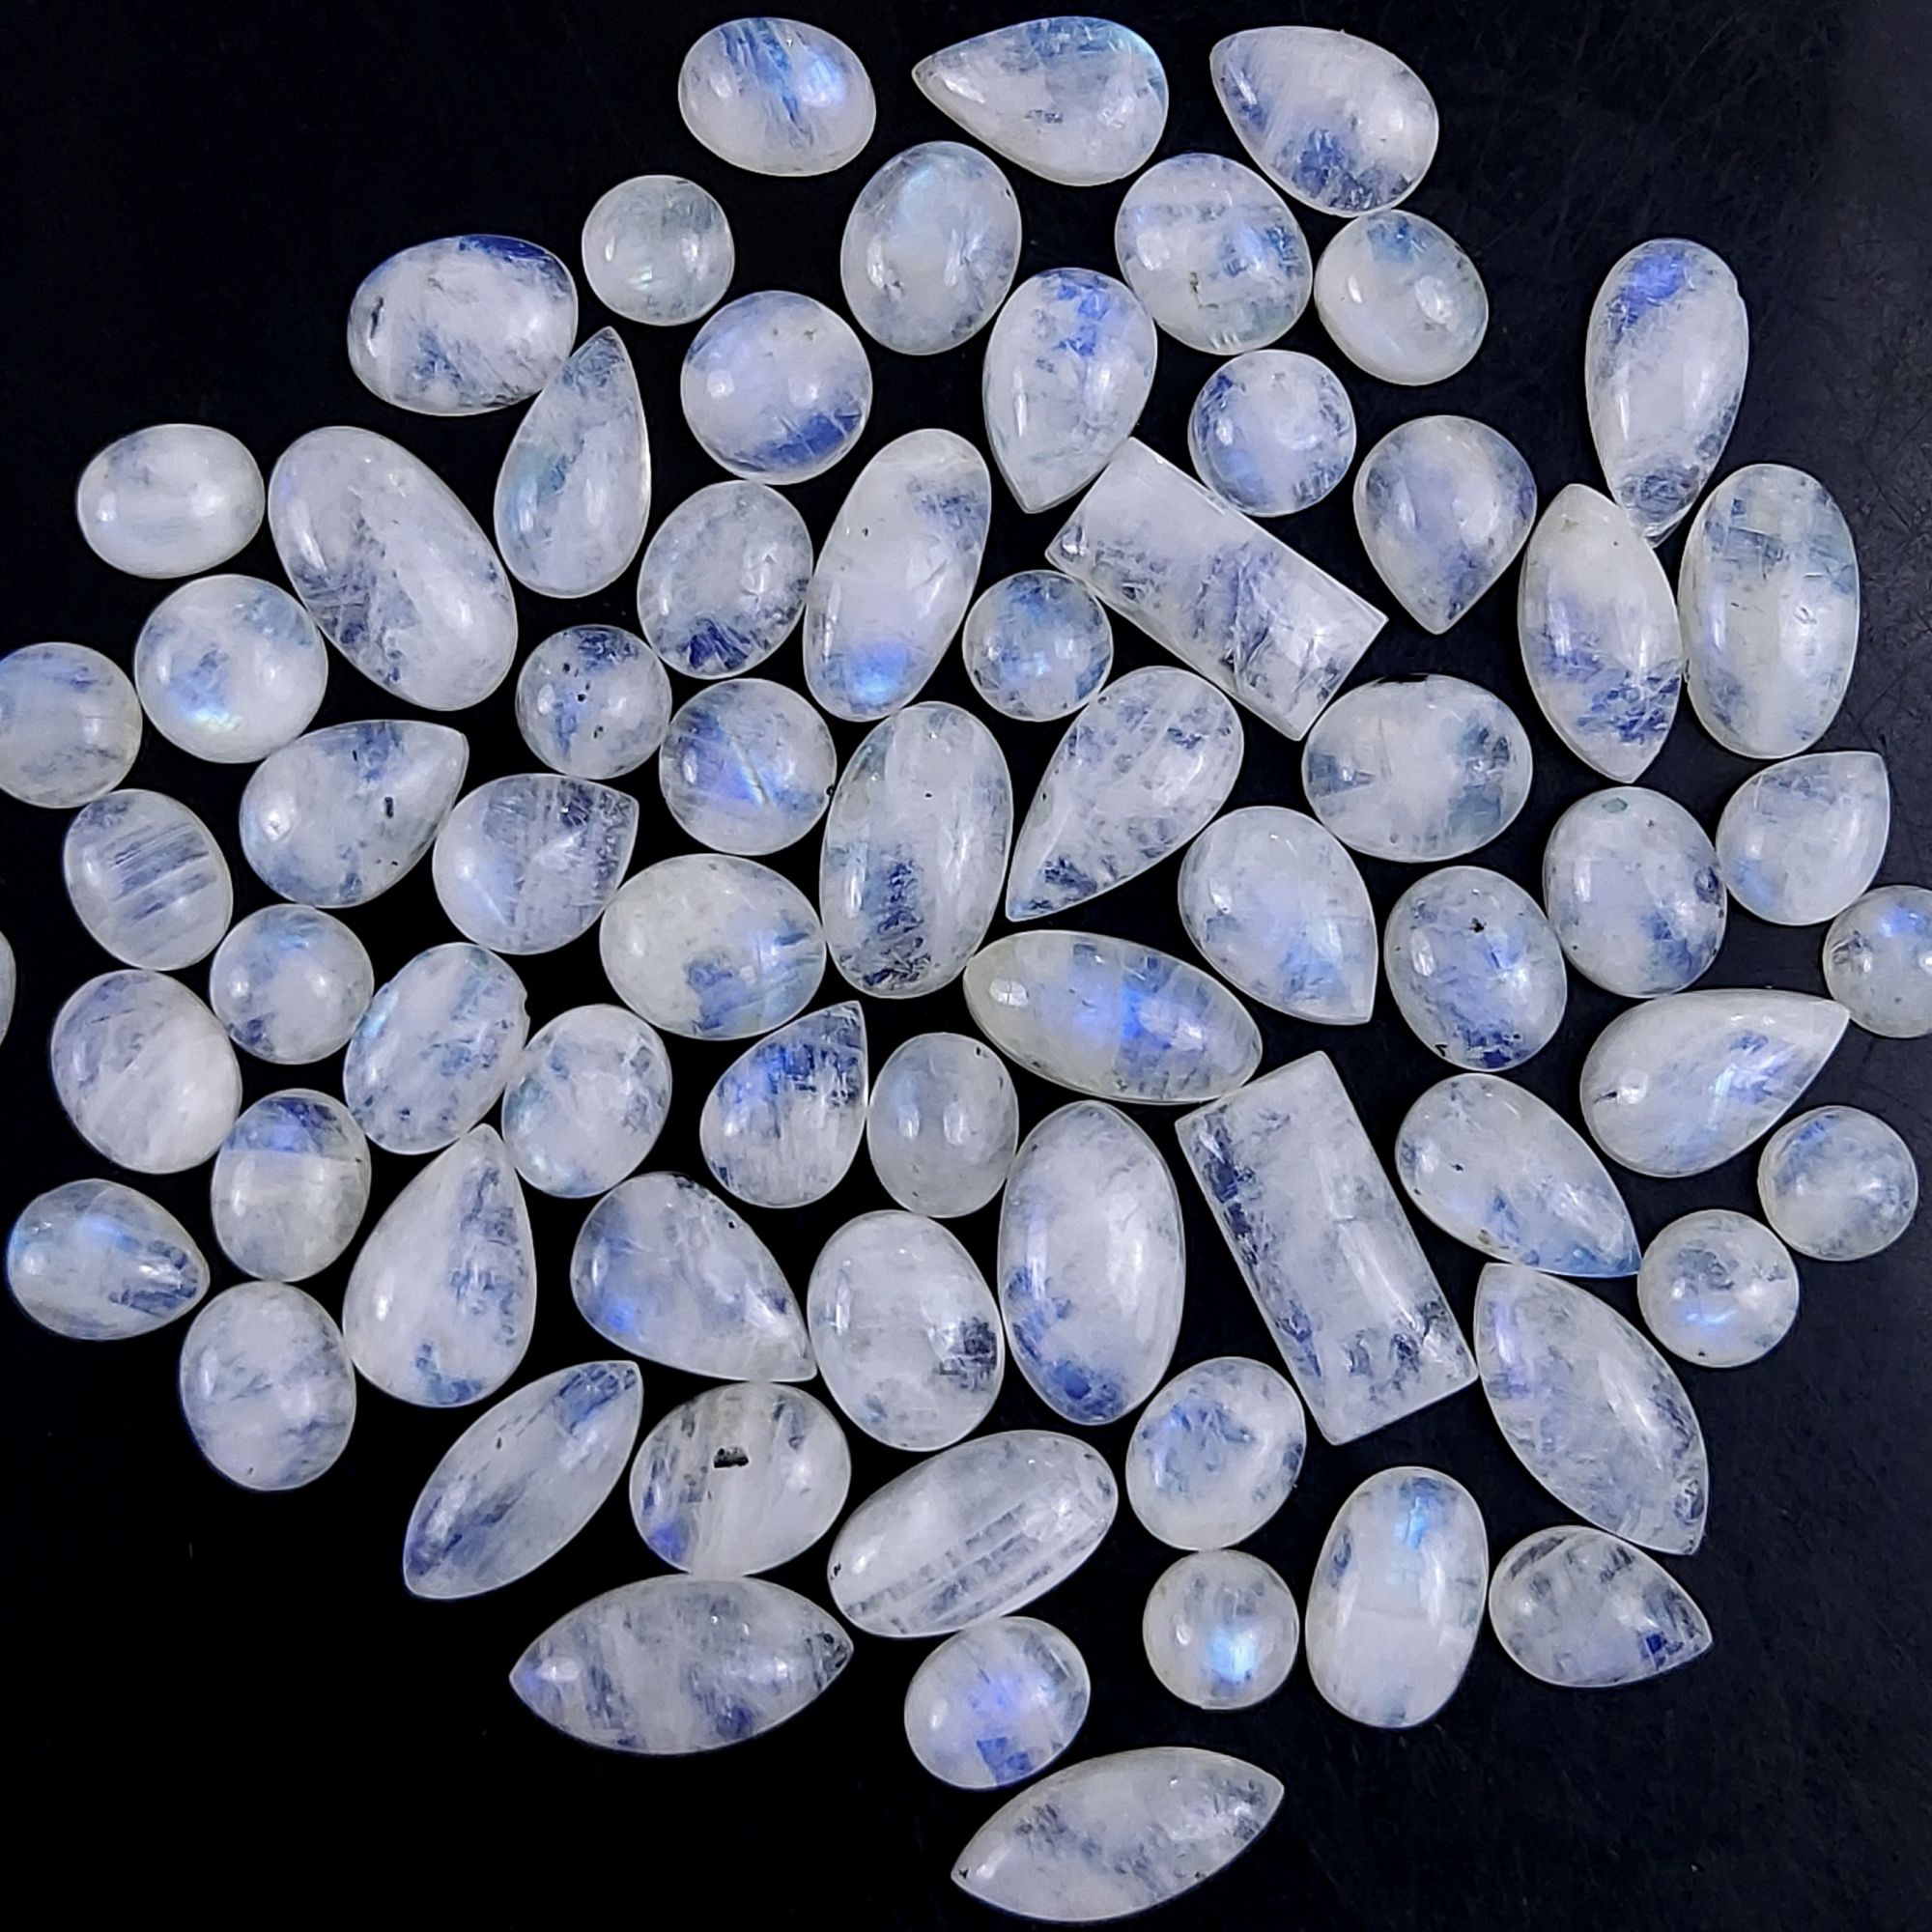 69Pcs 285Cts Natural Rainbow Cabochon Gemstone For Jewelry Making Crystal Cabochon Semi-Precious Rainbow Moonstone Flat Back Gemstone Lot 16x7 8x8mm#721